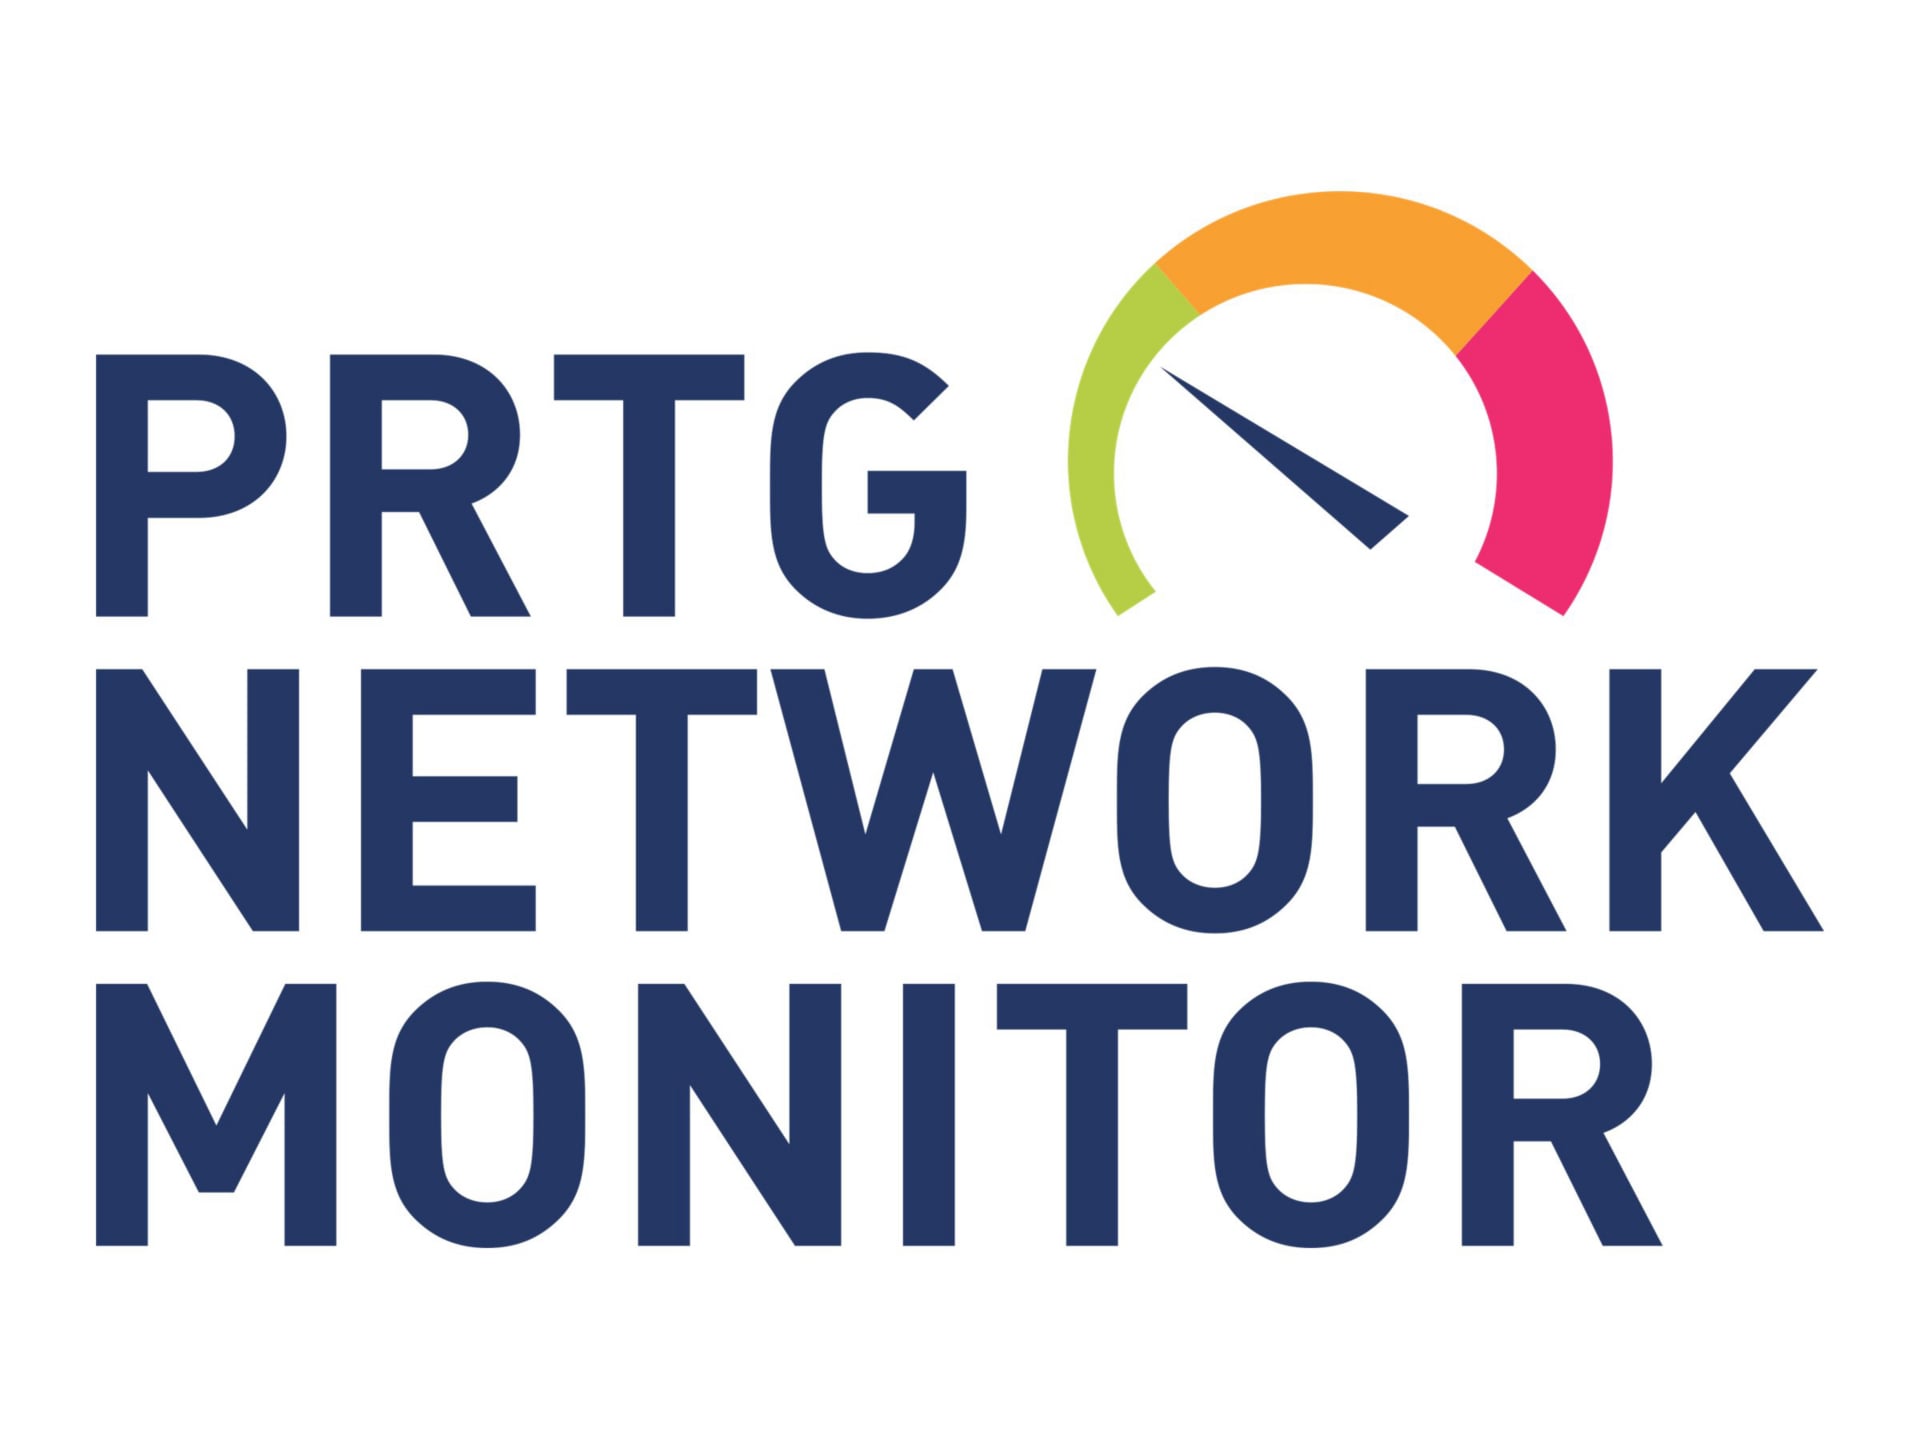 PRTG Network Monitor XL1 - license + Maintenance - unlimited sensors